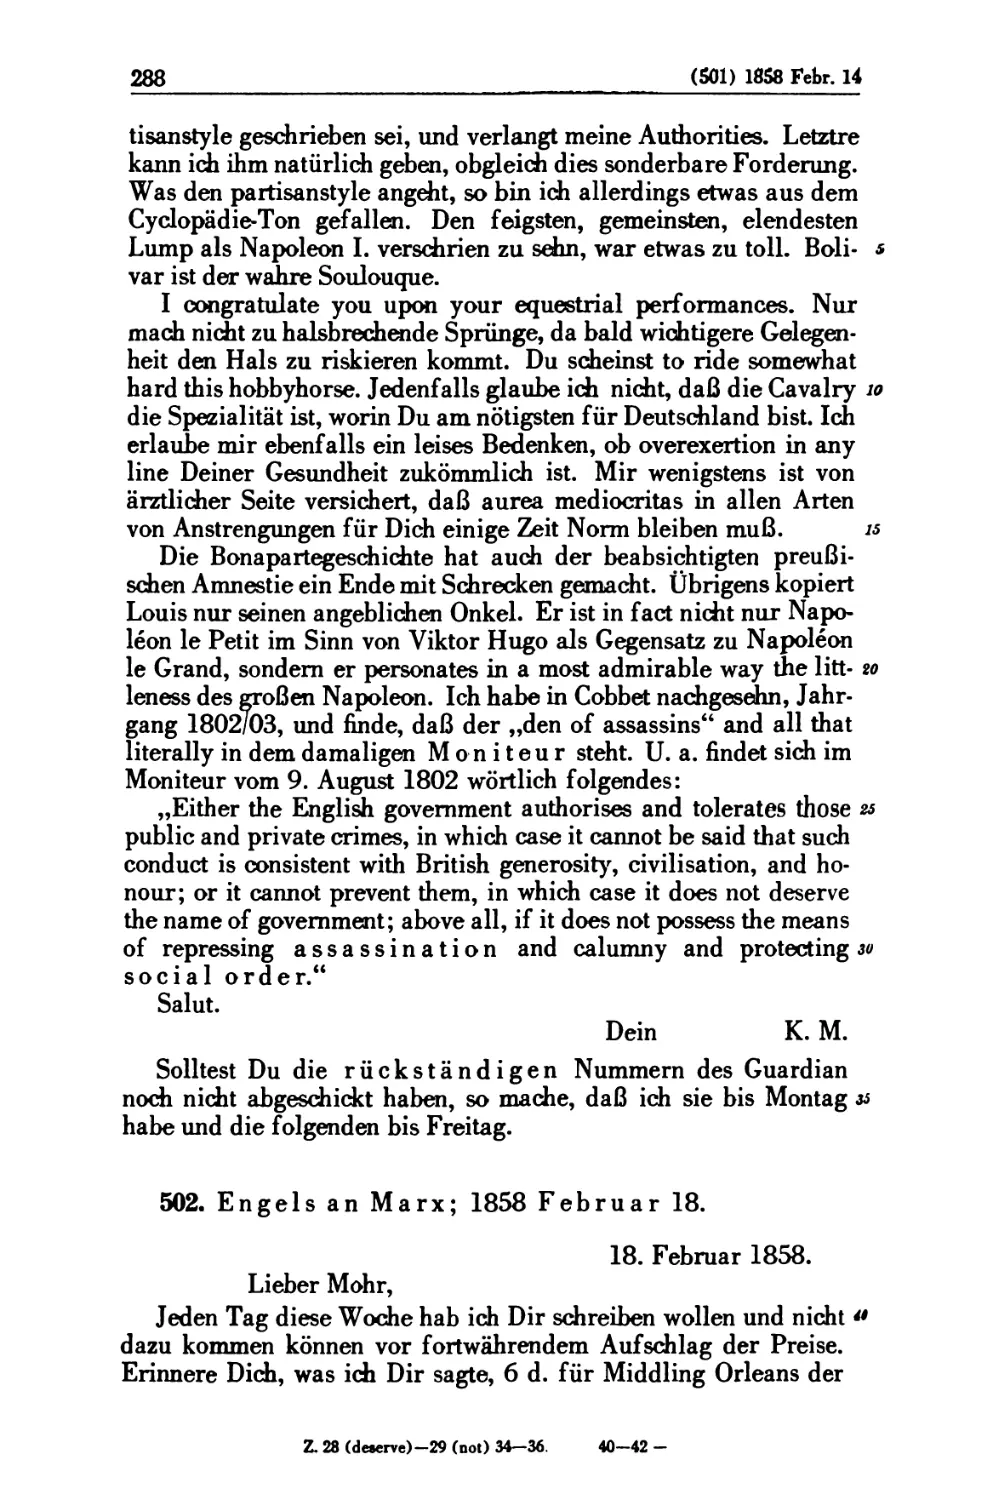 502. Engels an Marx; 1858 Februar 18